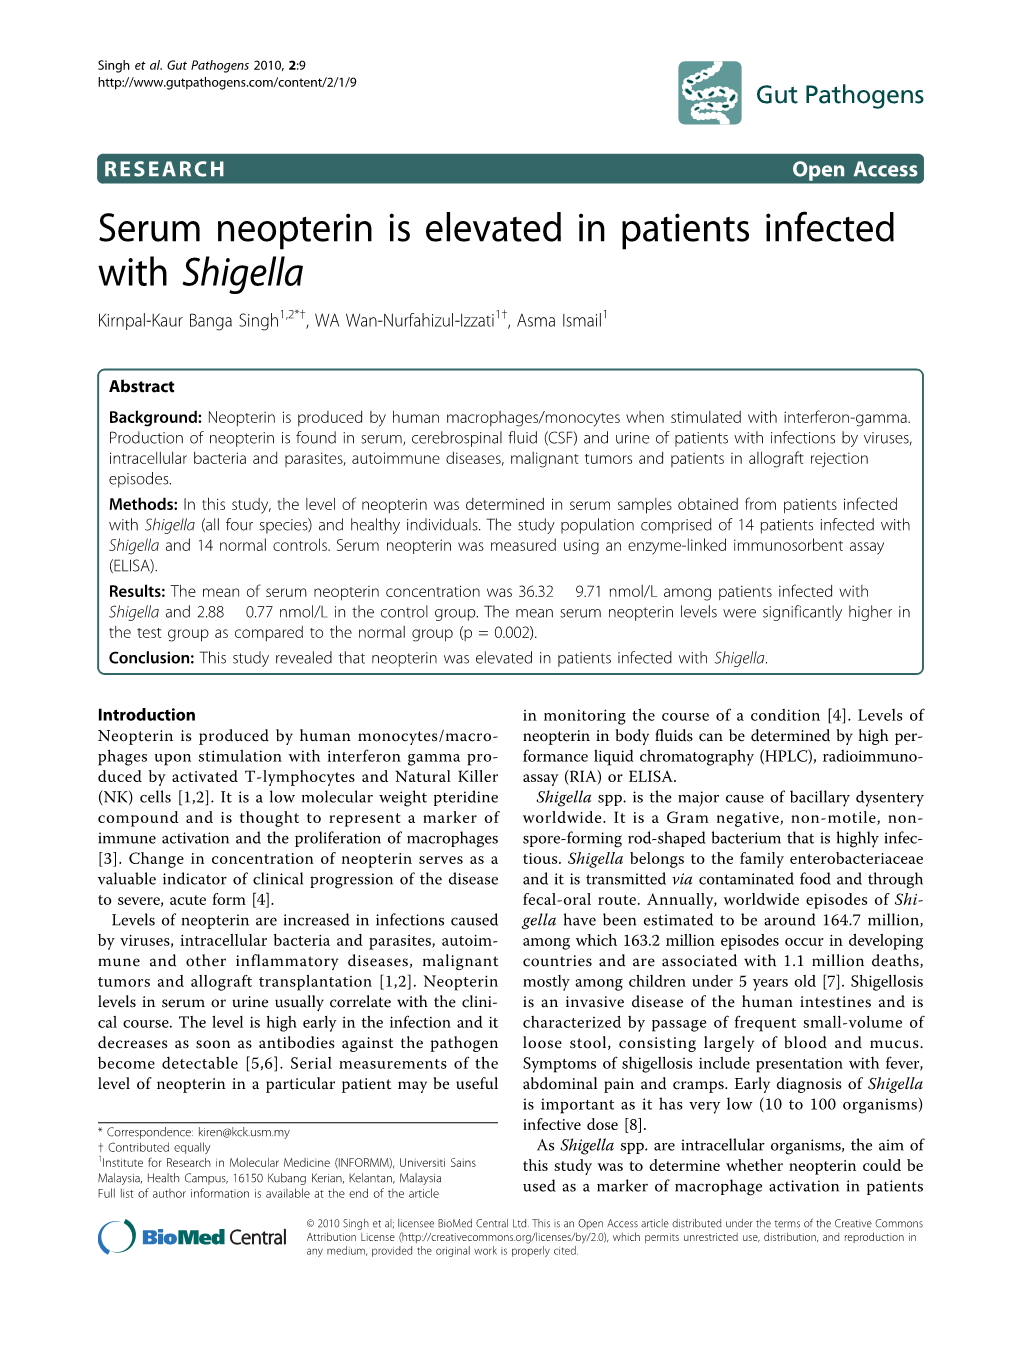 Serum Neopterin Is Elevated in Patients Infected with Shigella Kirnpal-Kaur Banga Singh1,2*†, WA Wan-Nurfahizul-Izzati1†, Asma Ismail1